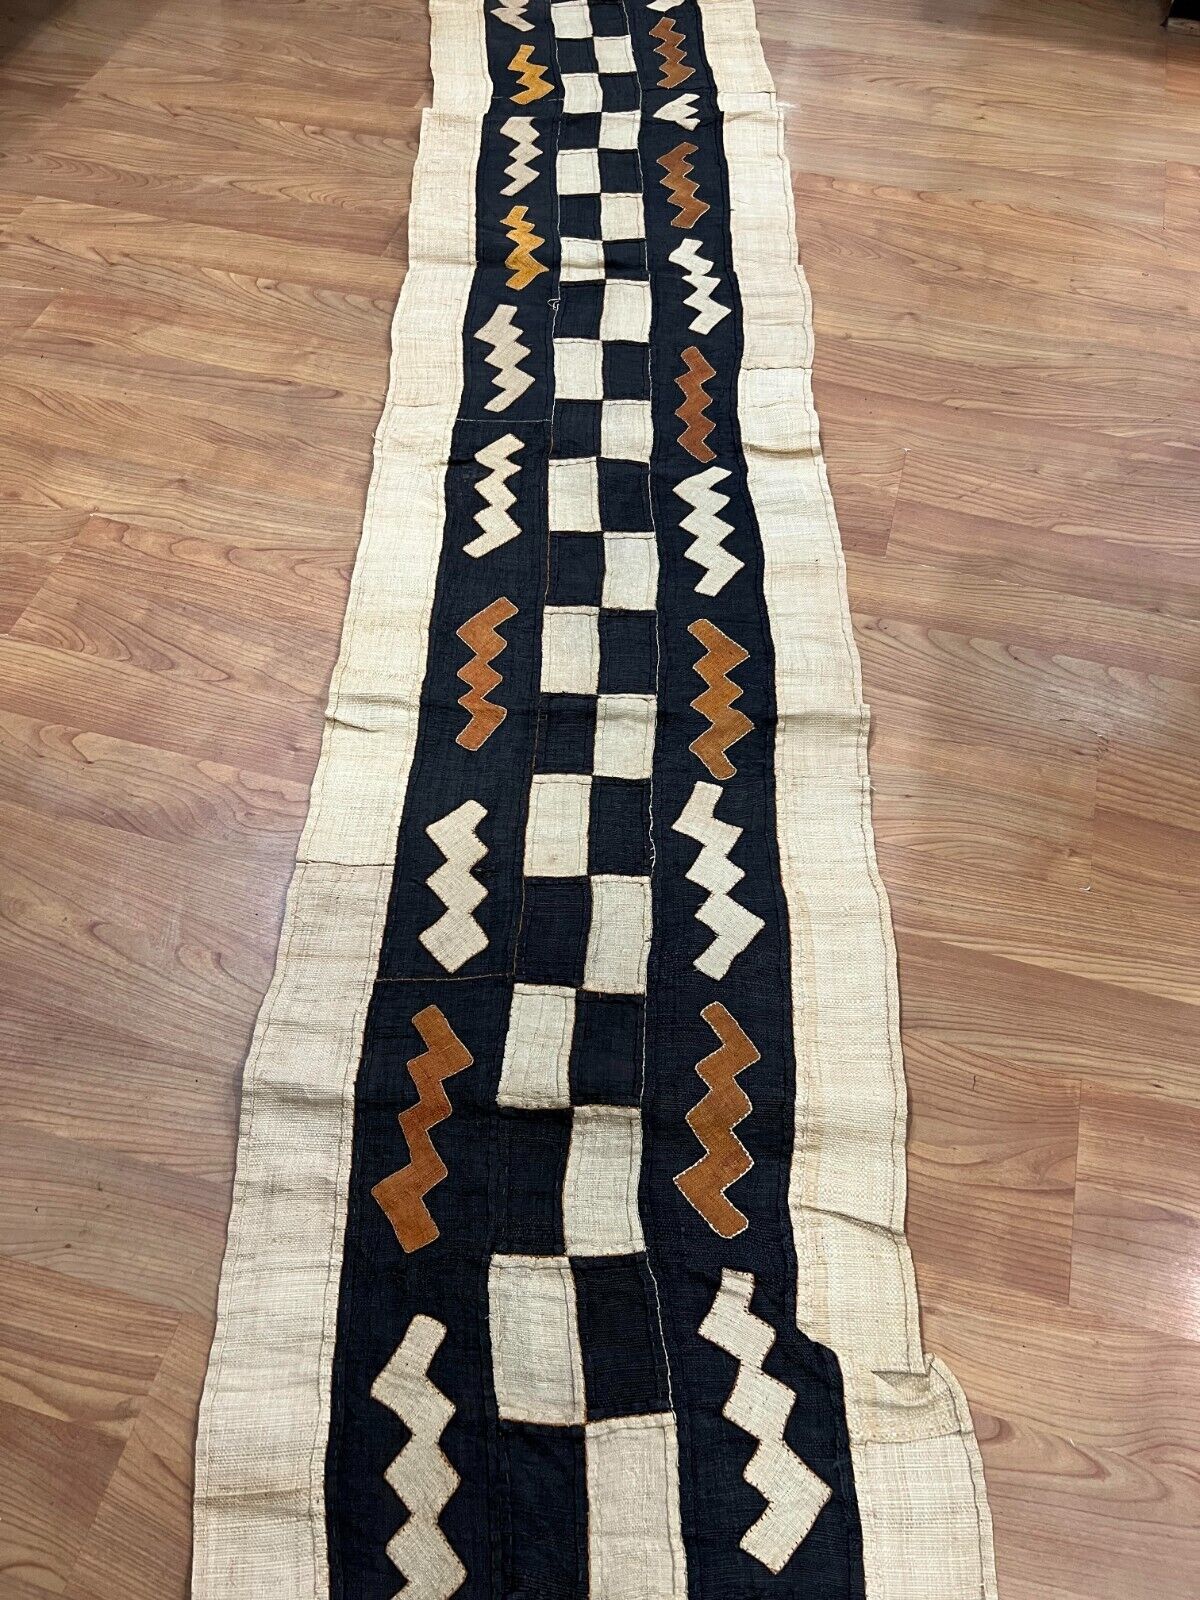 genuine 10 feet African (Congo) Kuba Raffia cloth fabric, natural woven handmade